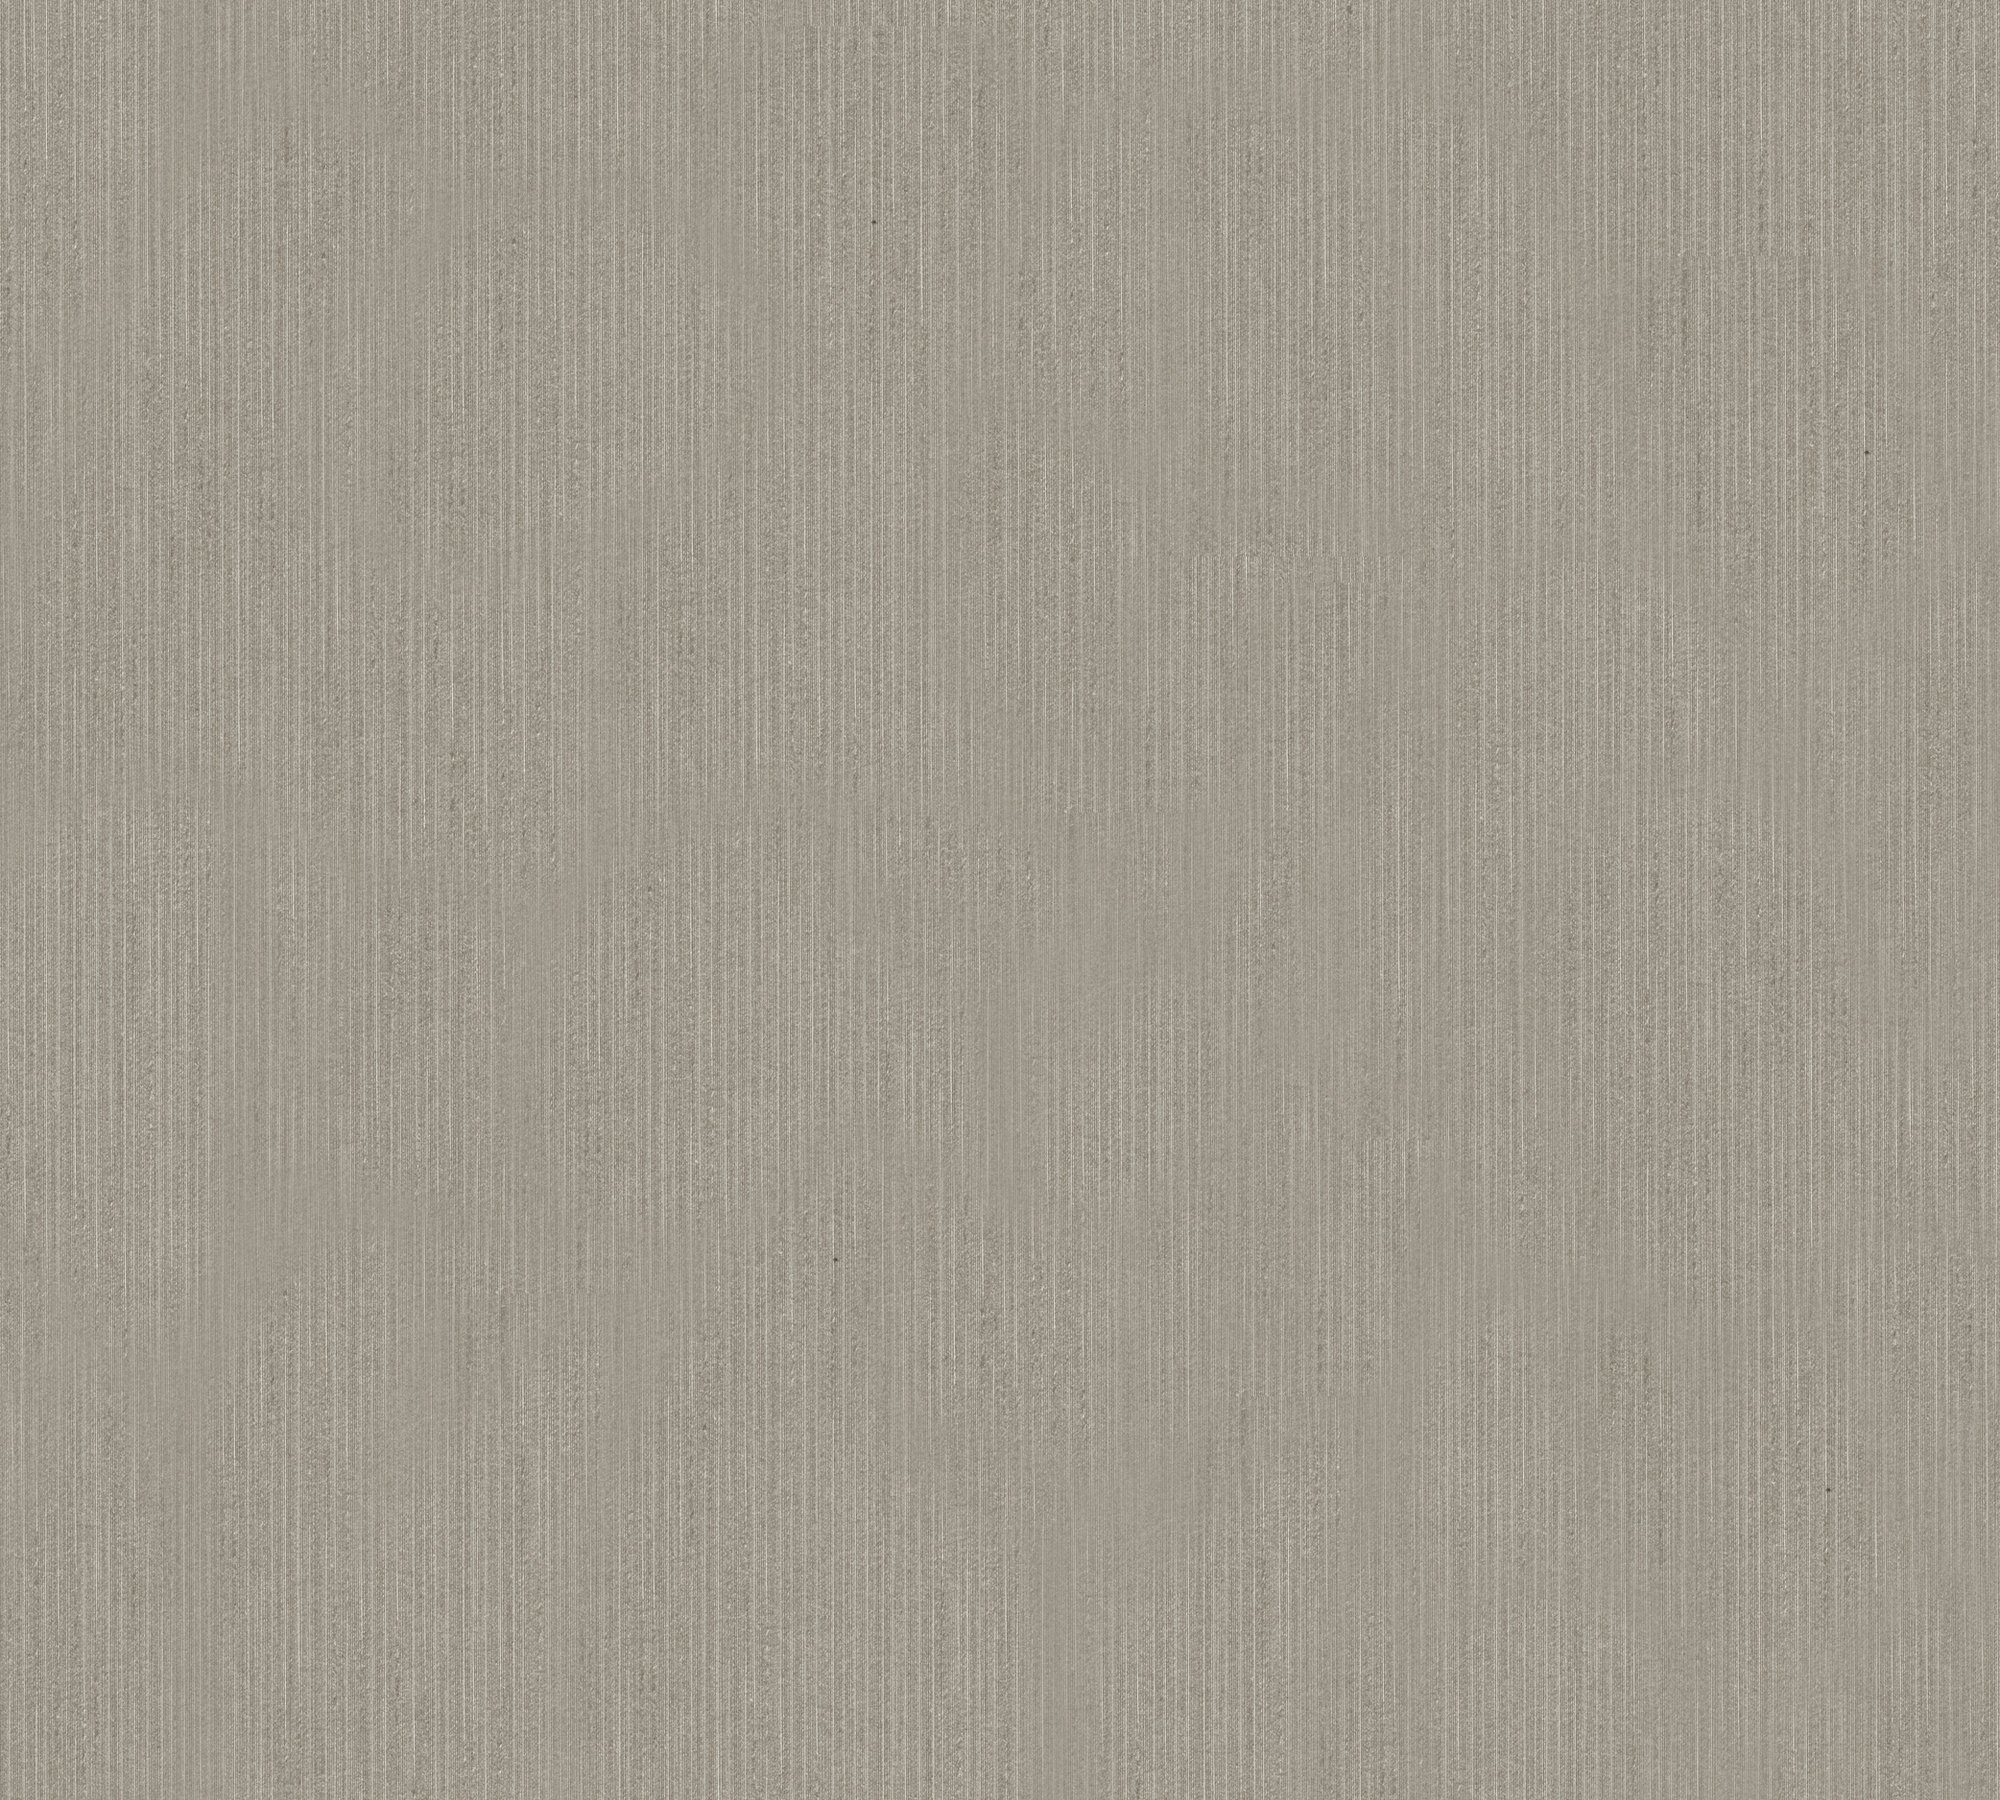 Paper Metallic Uni einfarbig, matt, Textiltapete Tapete samtig, Textil Silk, Architects beige/grau